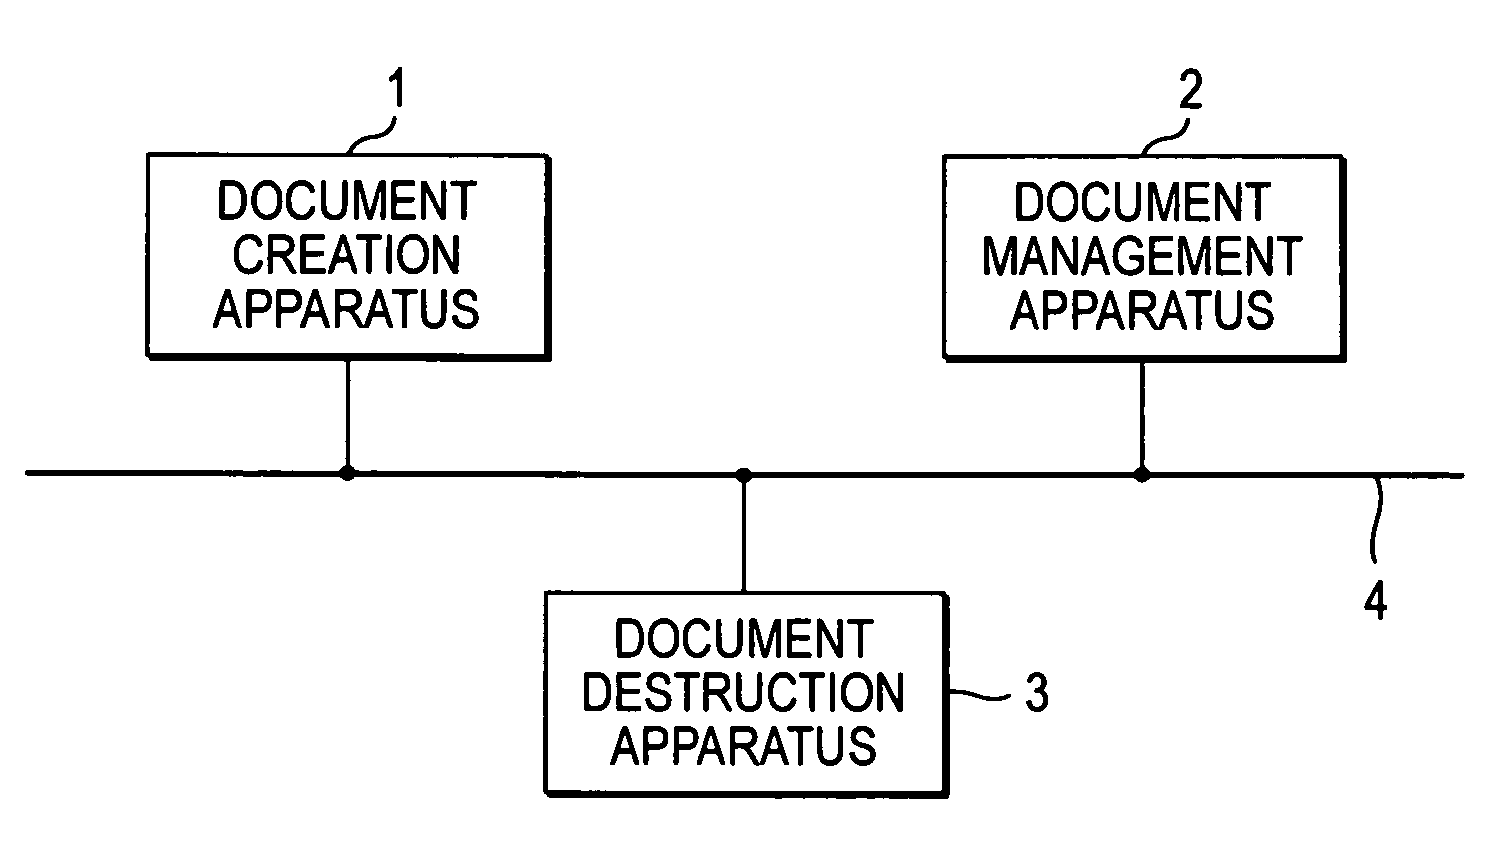 Document management system and document destruction apparatus